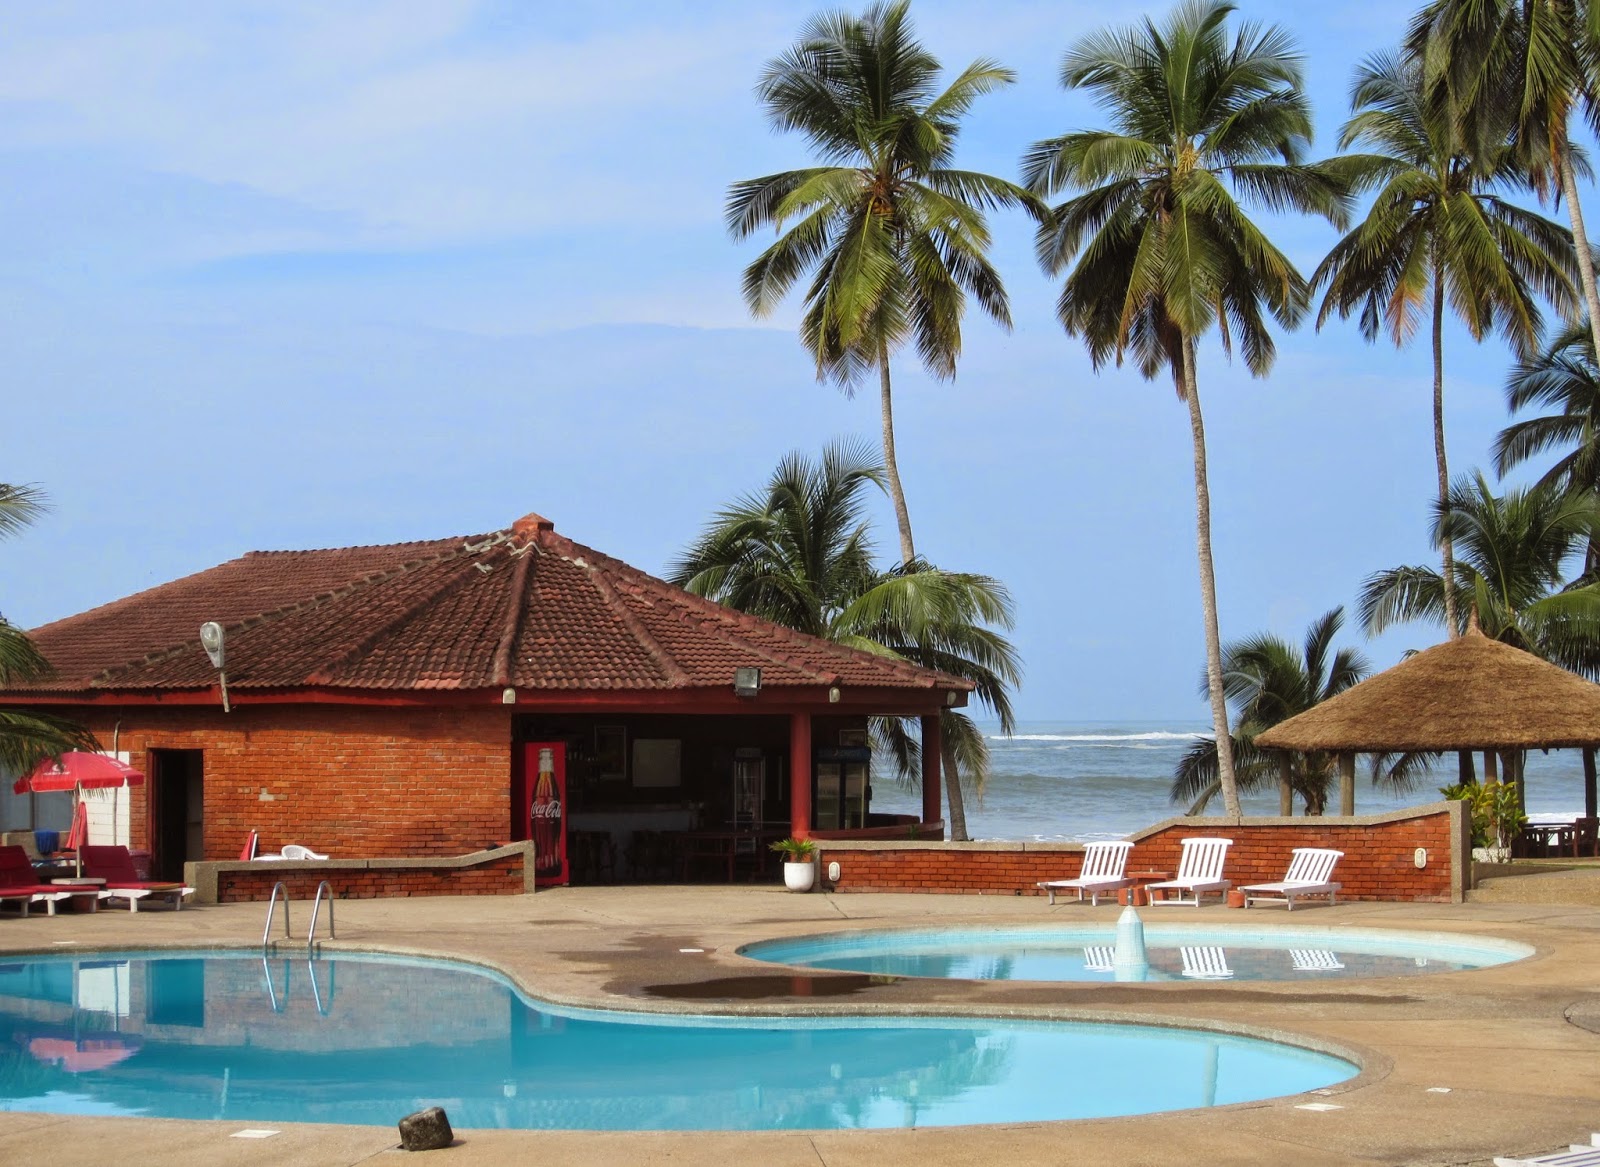 Coconut Grove Beach Resort is one of the best resorts in Ghana